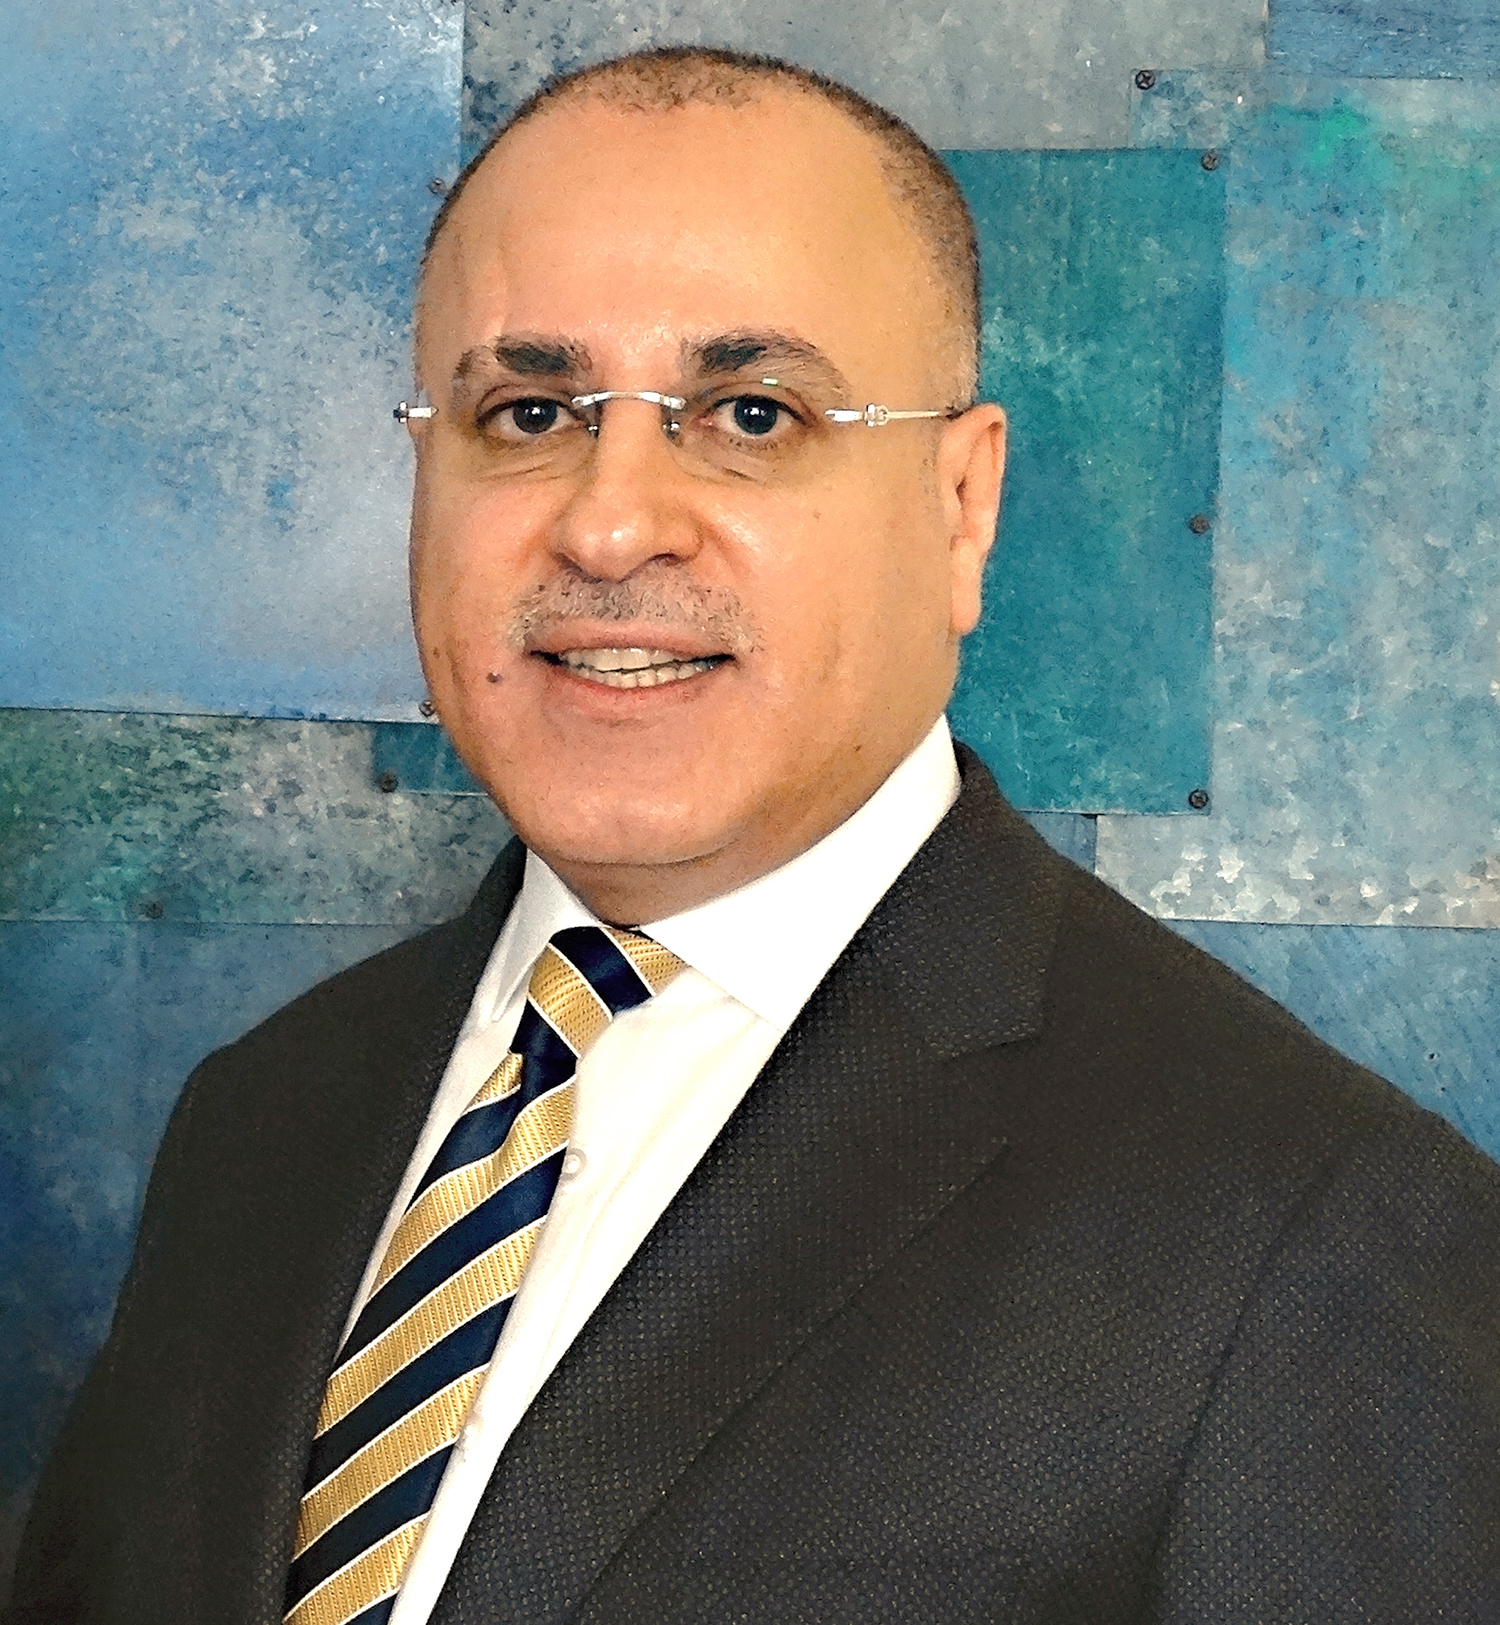 Ambassador Jamal Al-Ghunaim